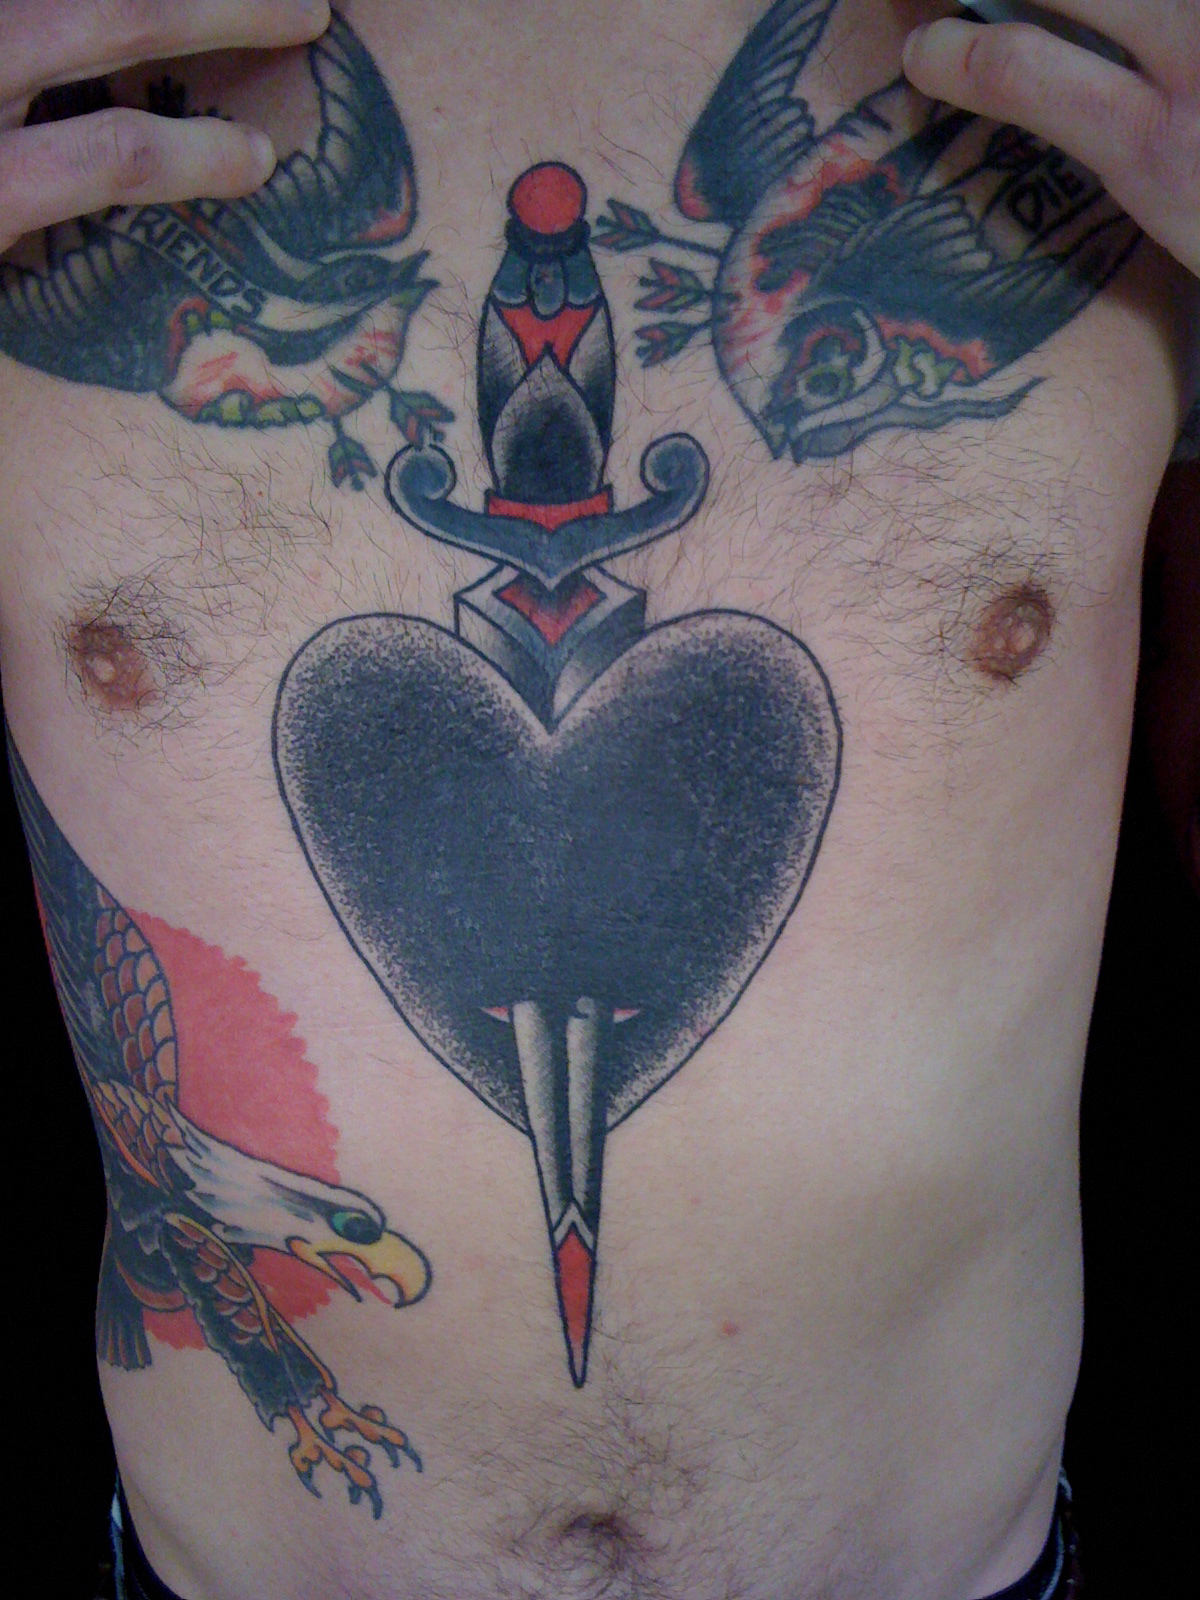 Jeb Maykut - Flyrite Tattoo: Black heart with dagger chest tattoo